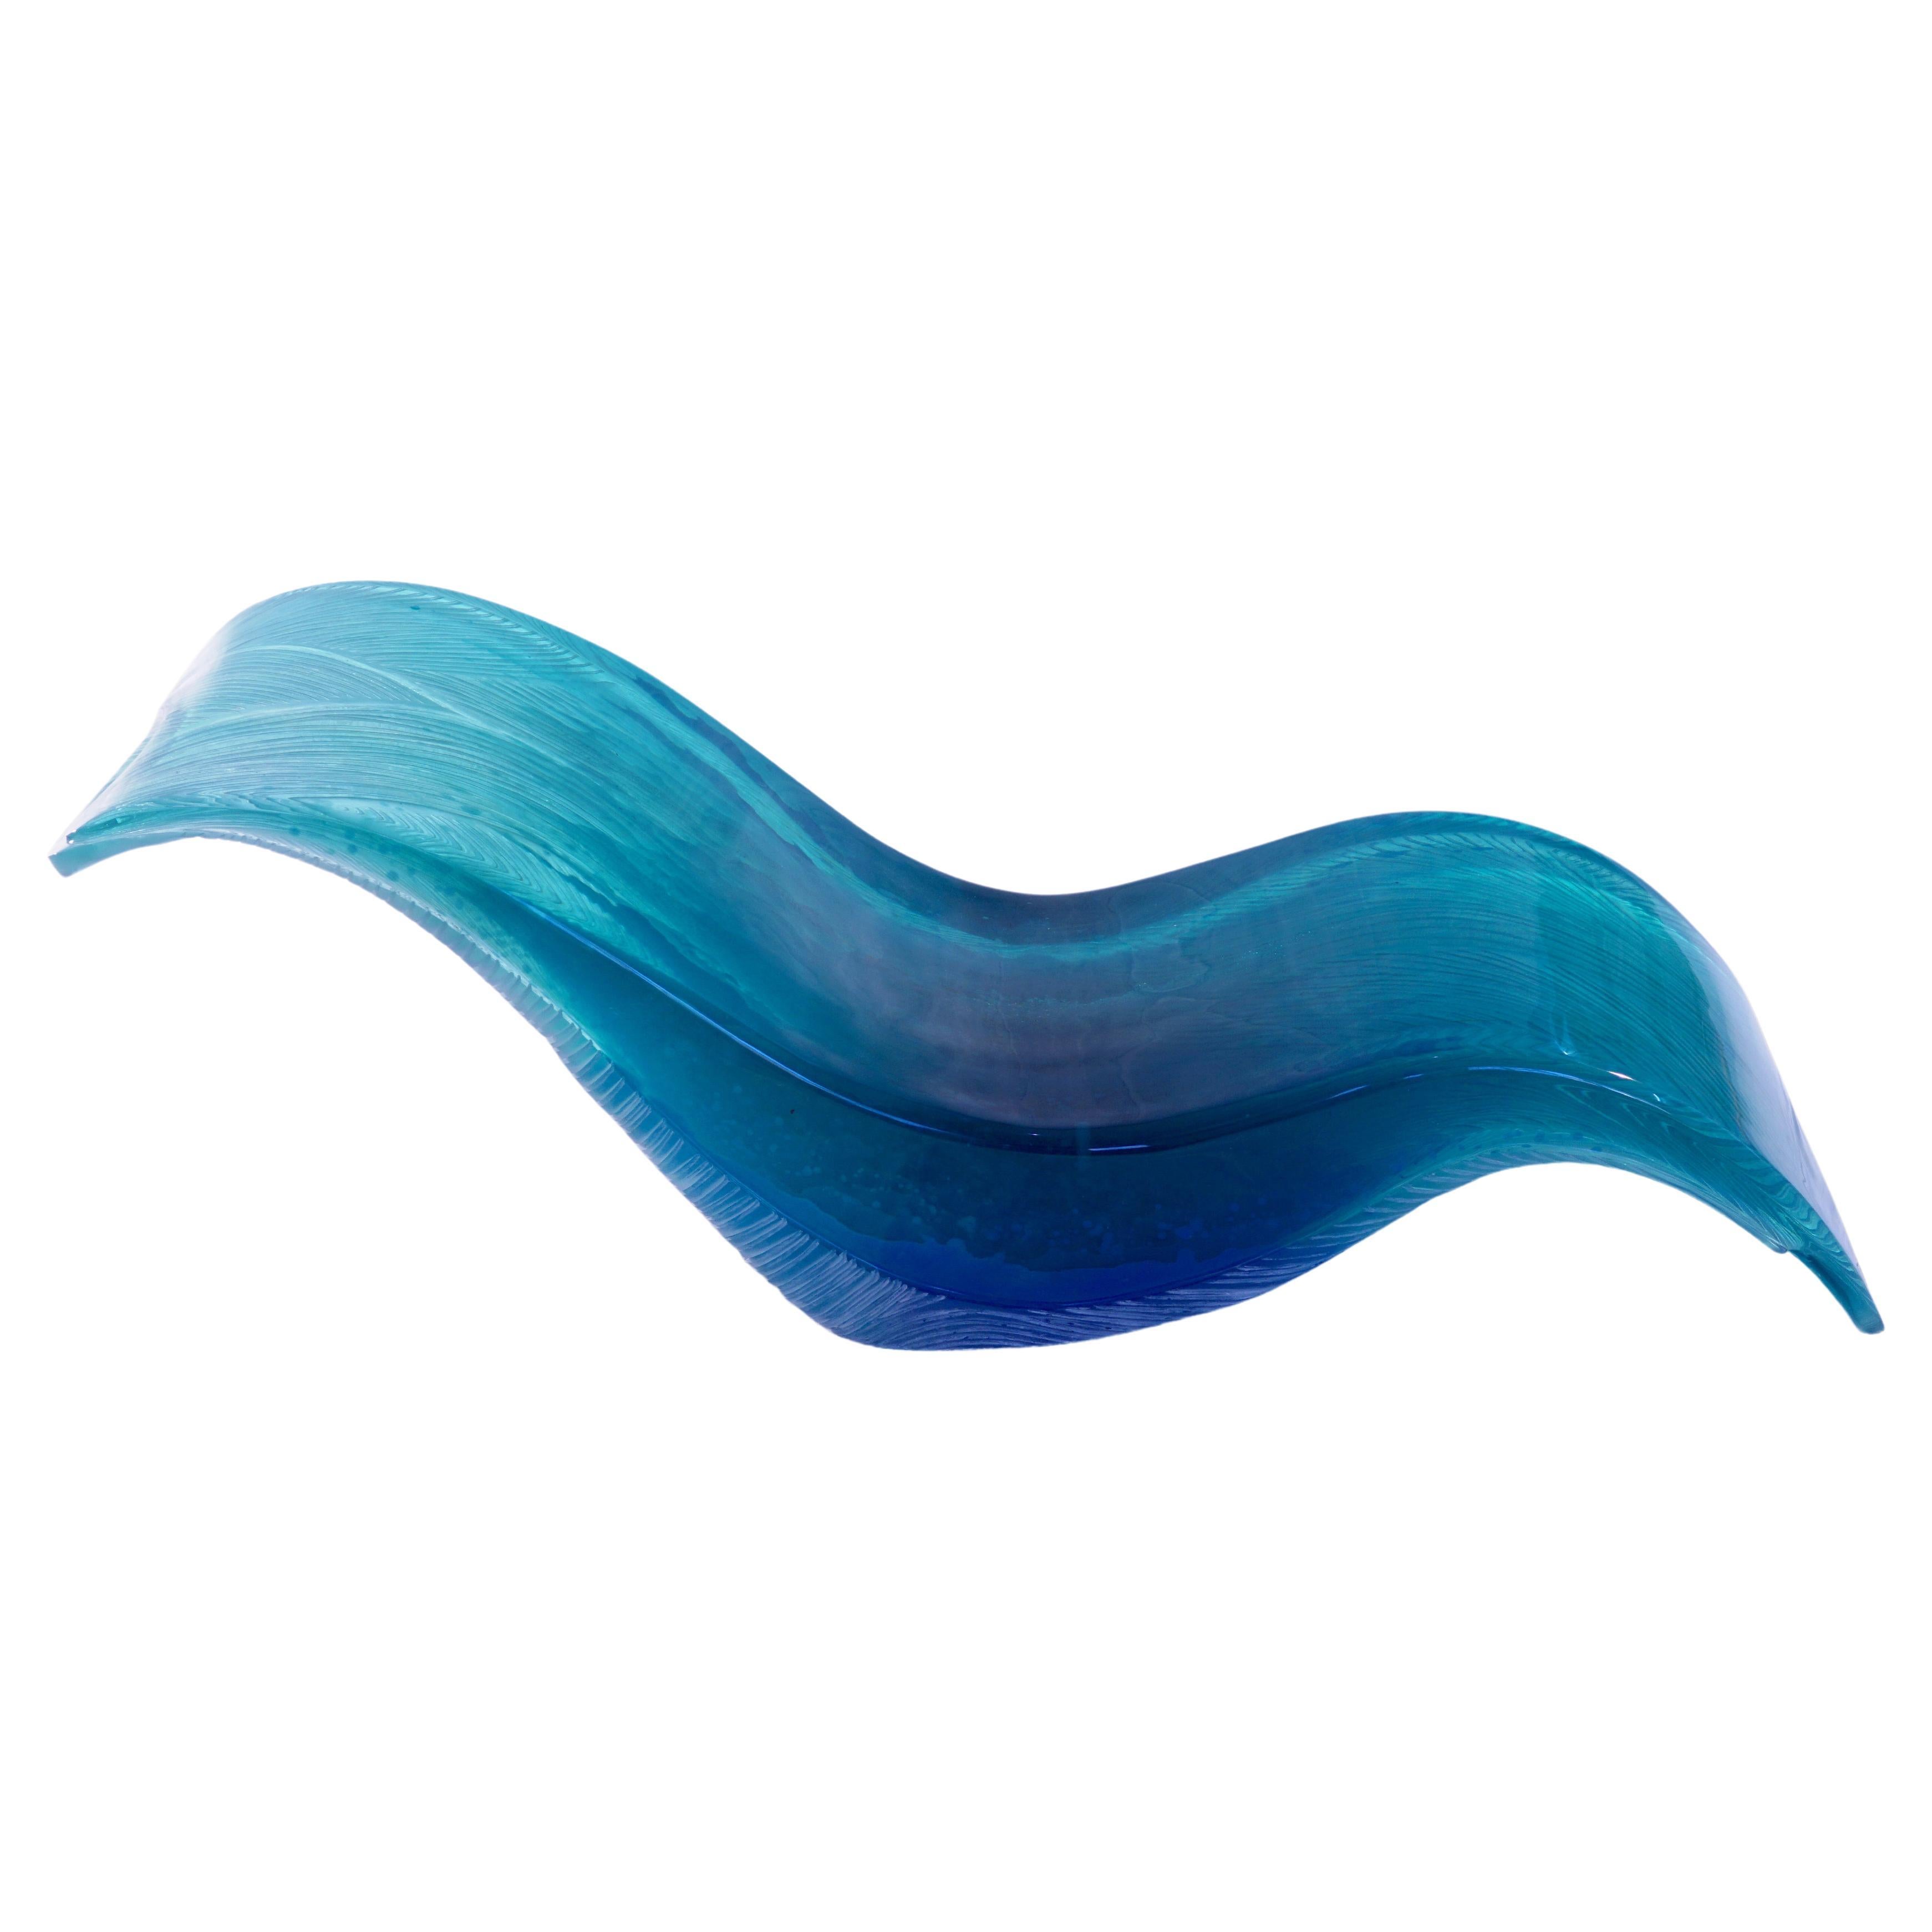 Wave Lounge di Eduard Locota. Design scultoreo in vetro acrilico turchese-blu